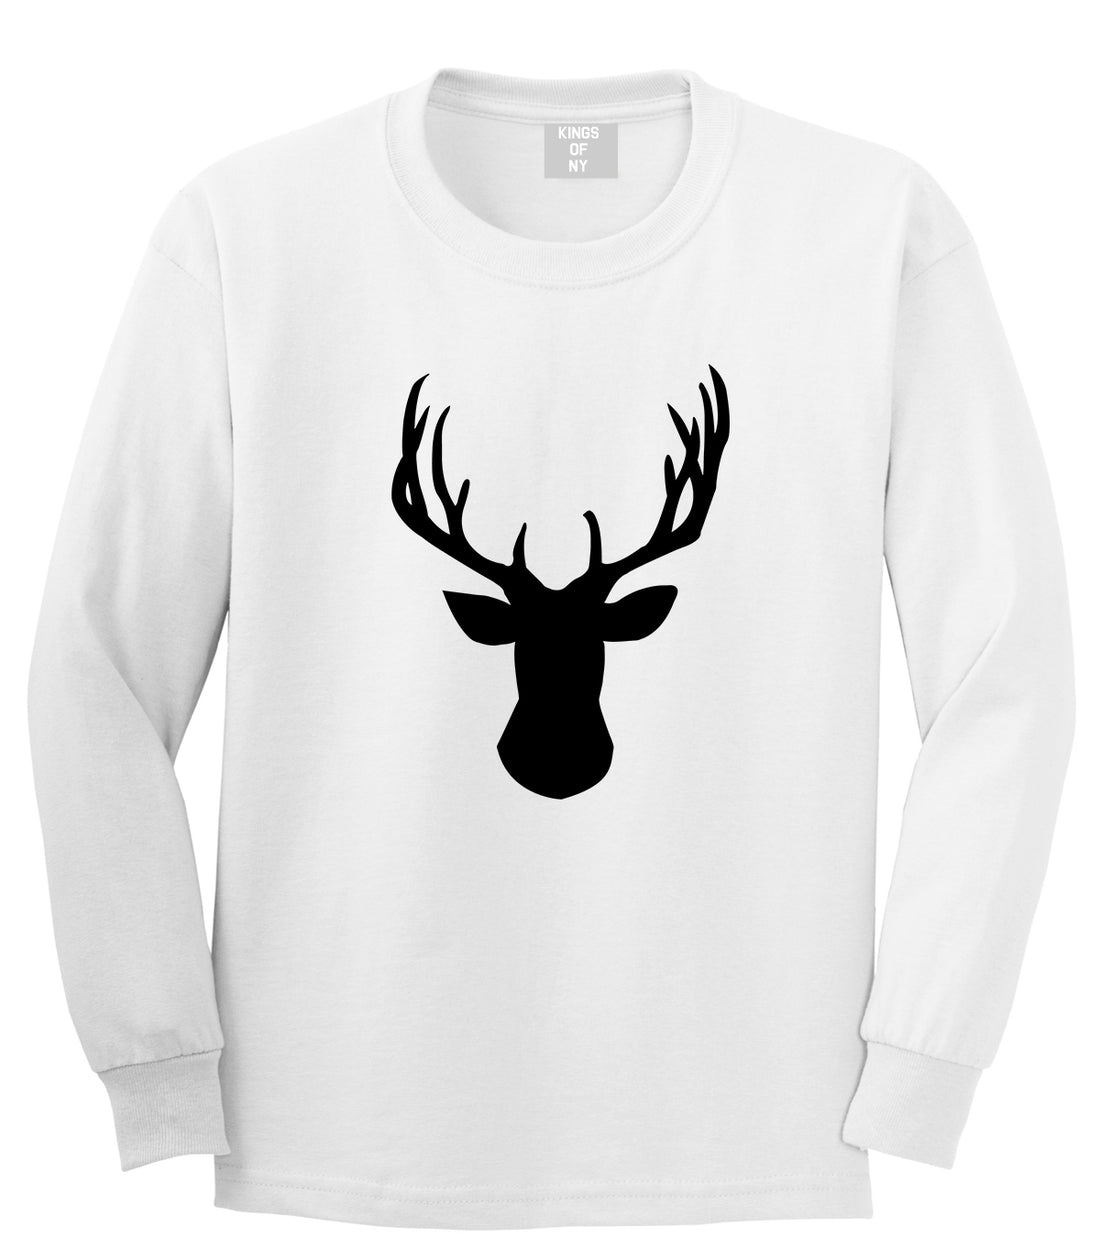 Elk Antler Deer Animal Mens White Long Sleeve T-Shirt by Kings Of NY